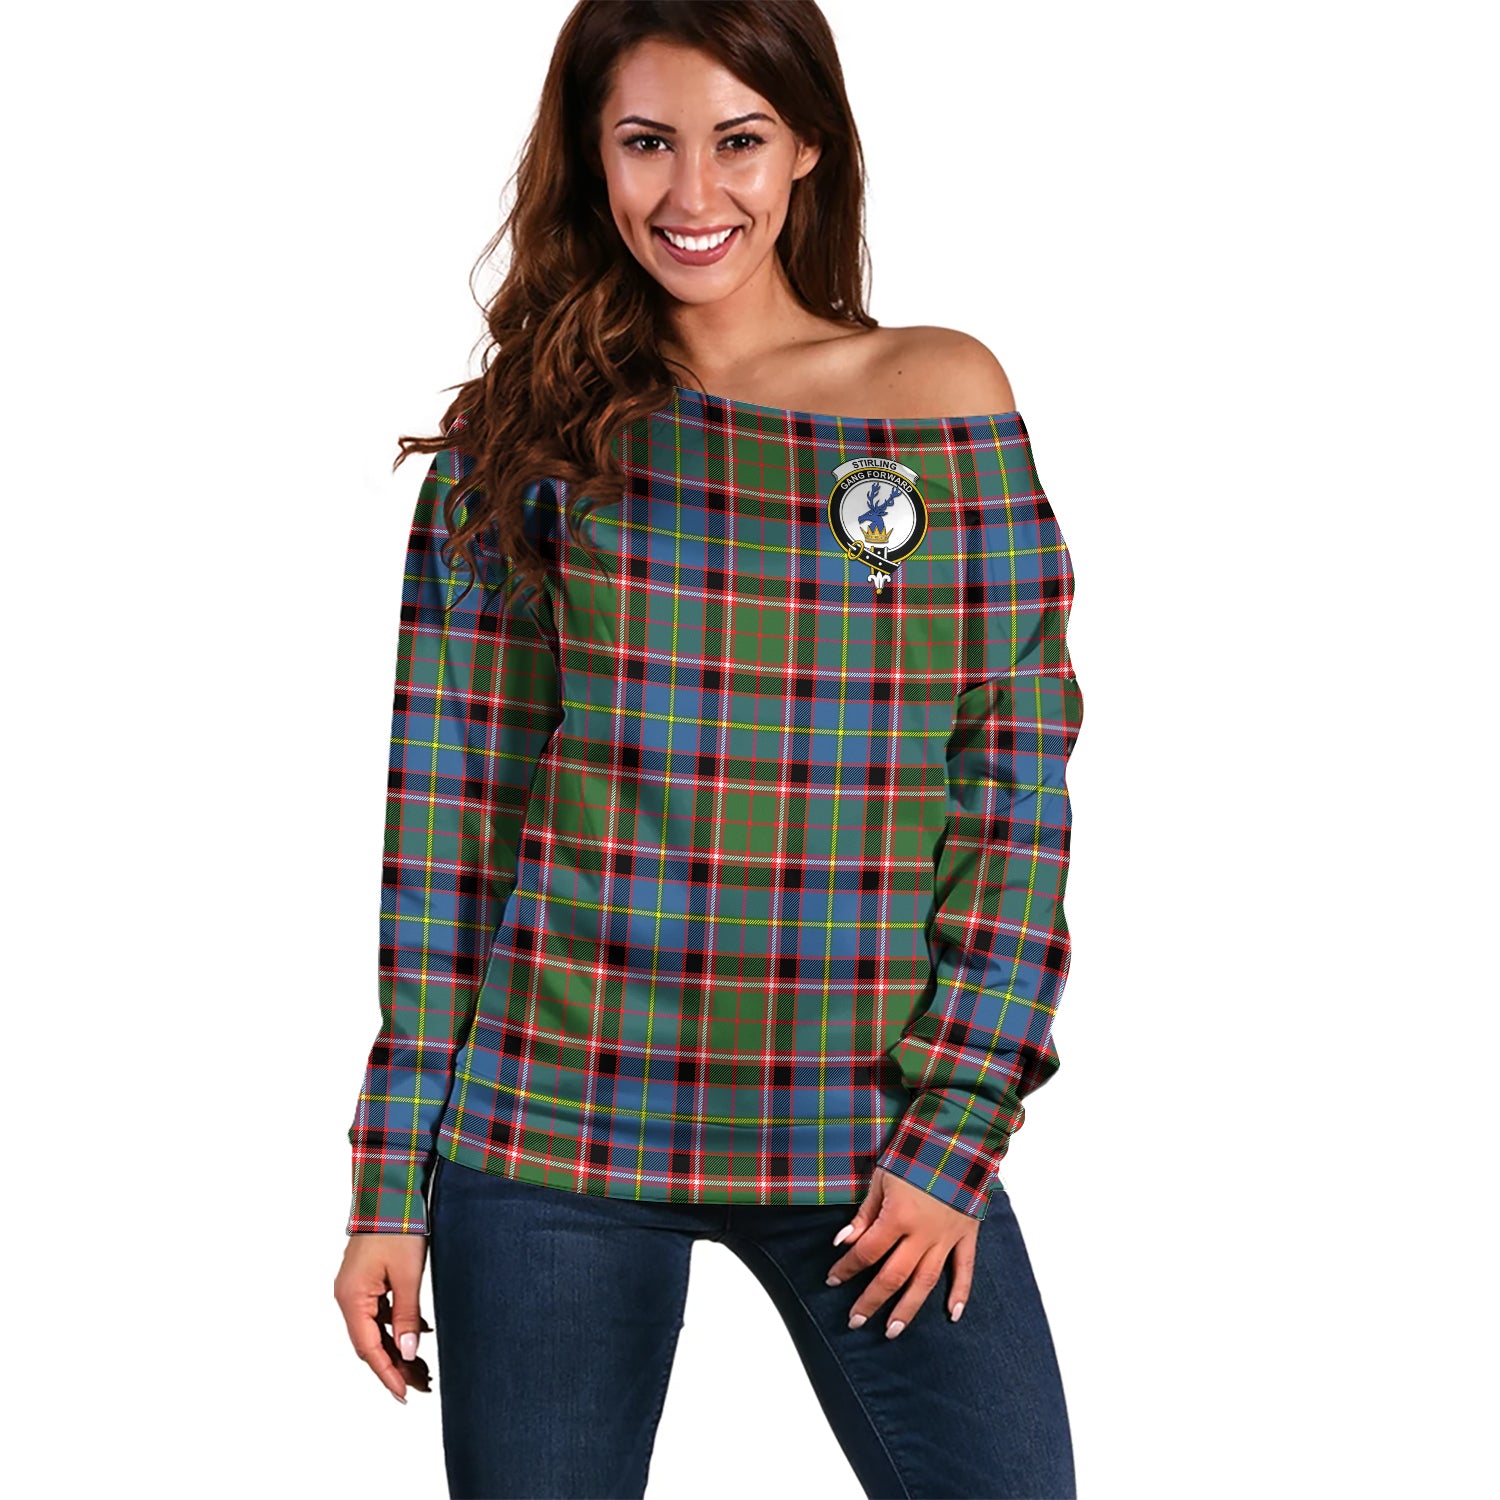 stirling-bannockburn-clan-tartan-off-shoulder-sweater-family-crest-sweater-for-women